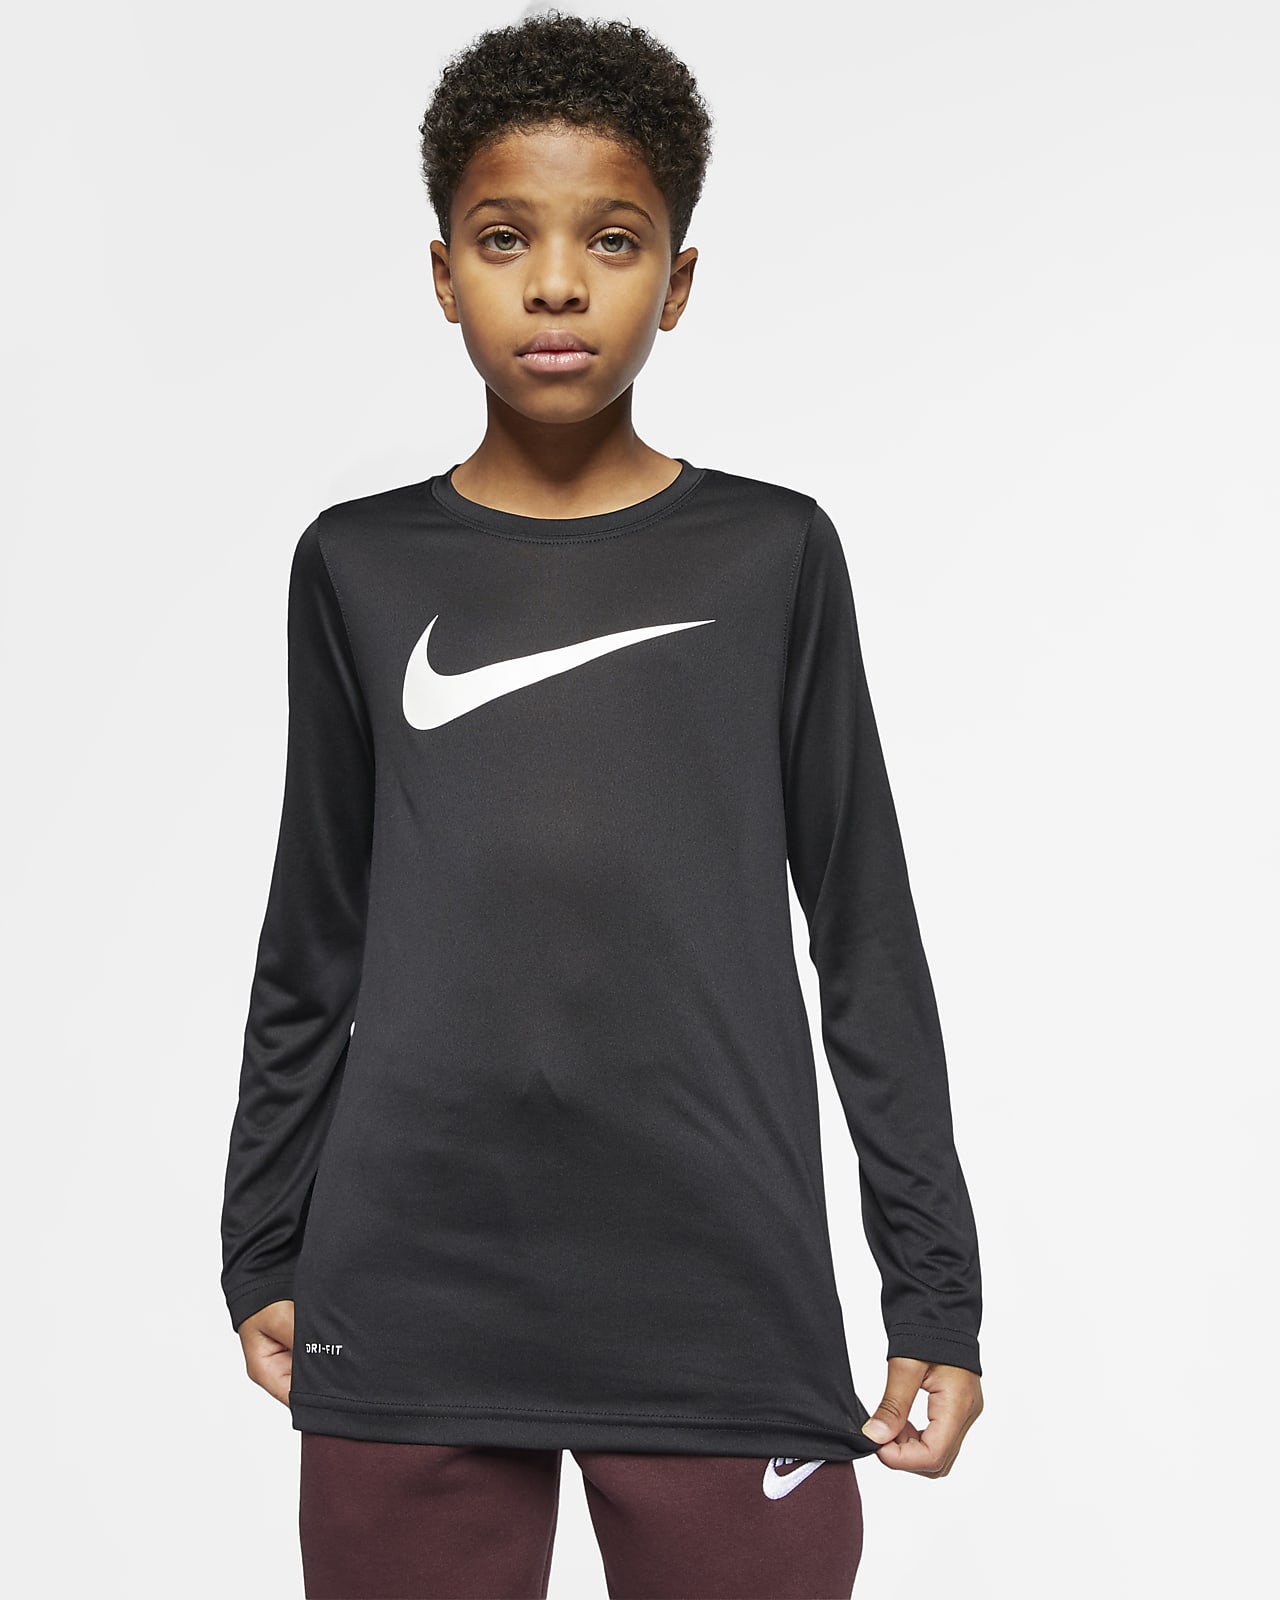 Nike Dri Fit Shirts Long Sleeve Hotsell, 58% OFF | www 